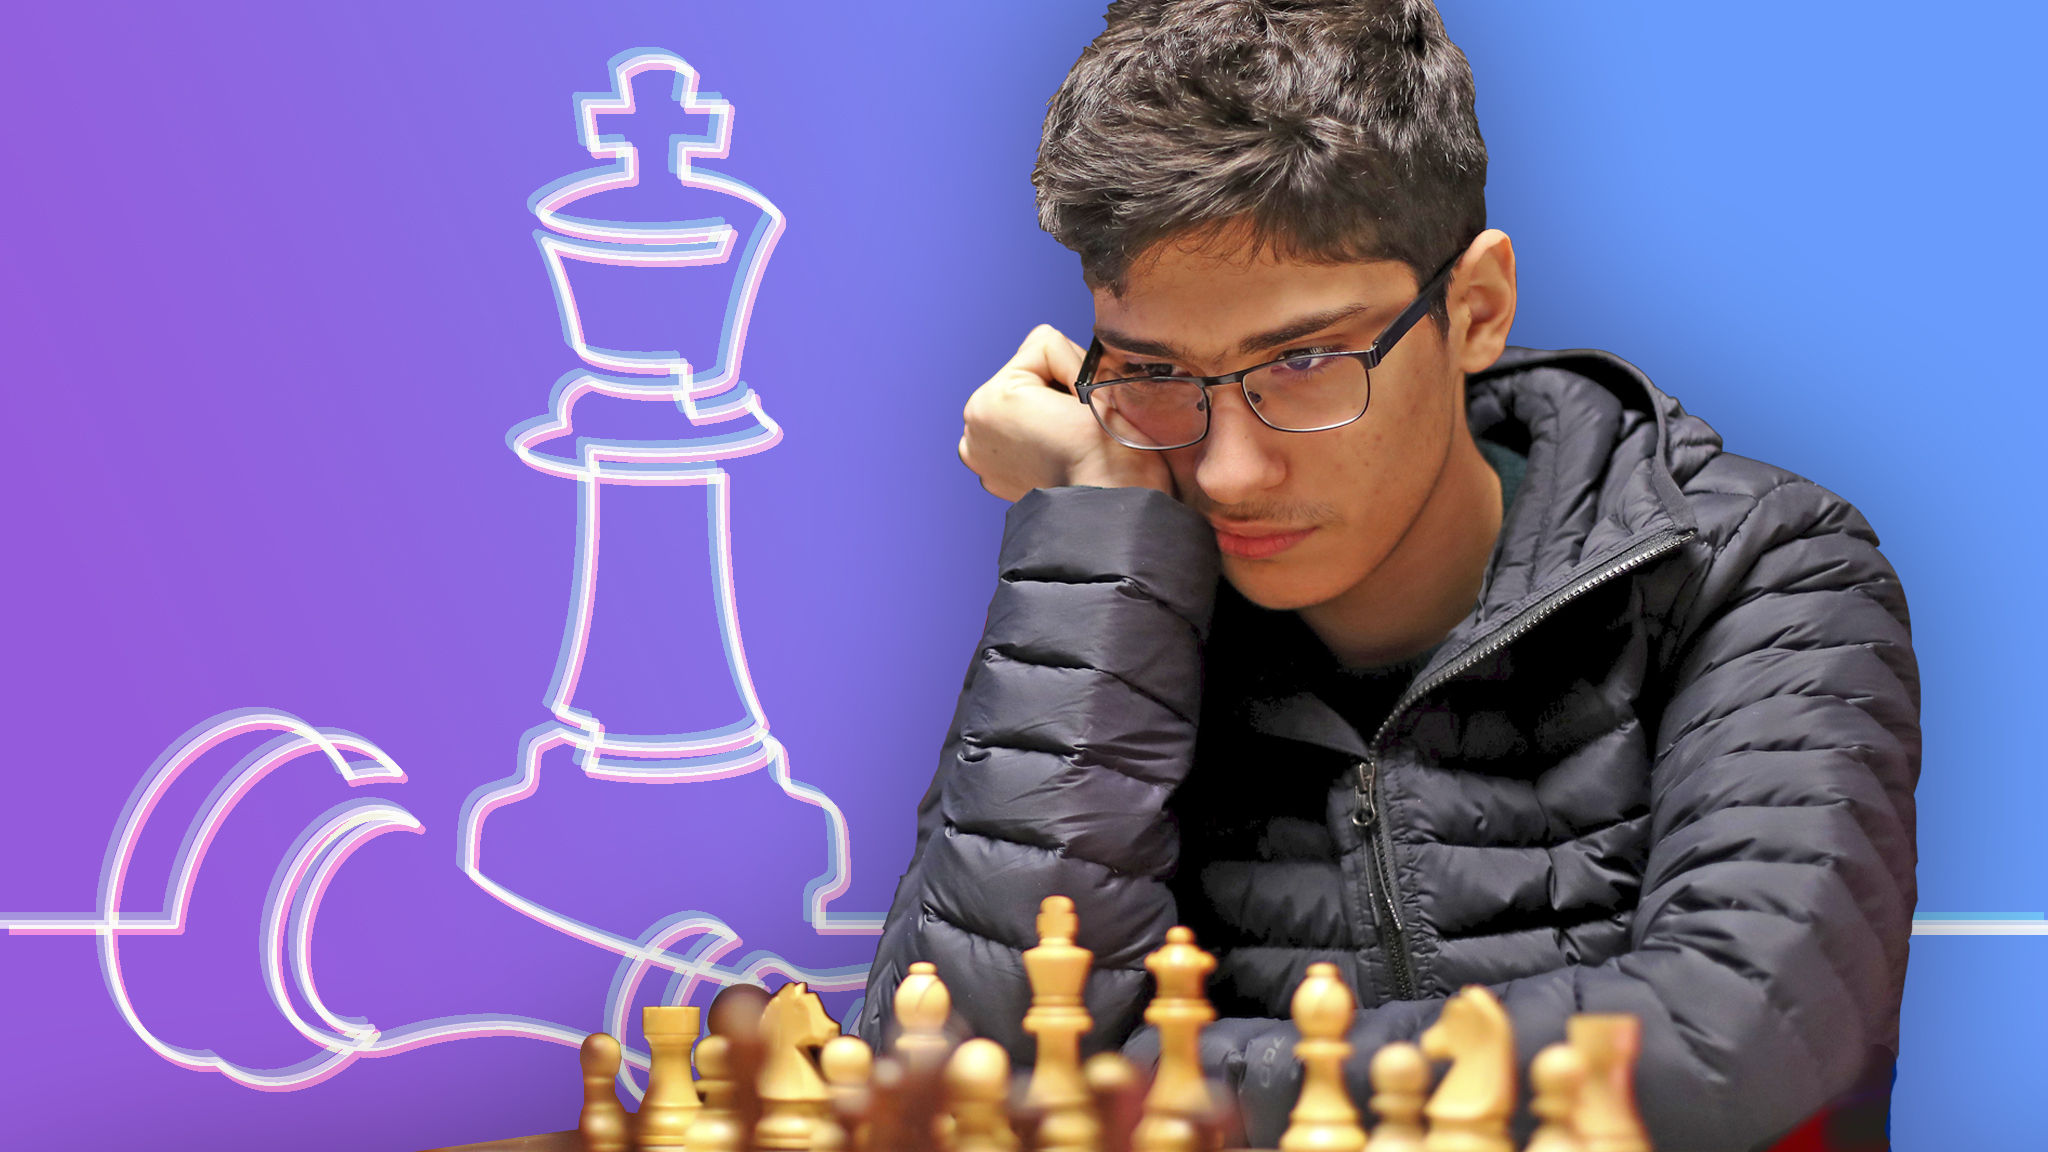 Alireza Firouzja is now the French no. 1, chess24.com